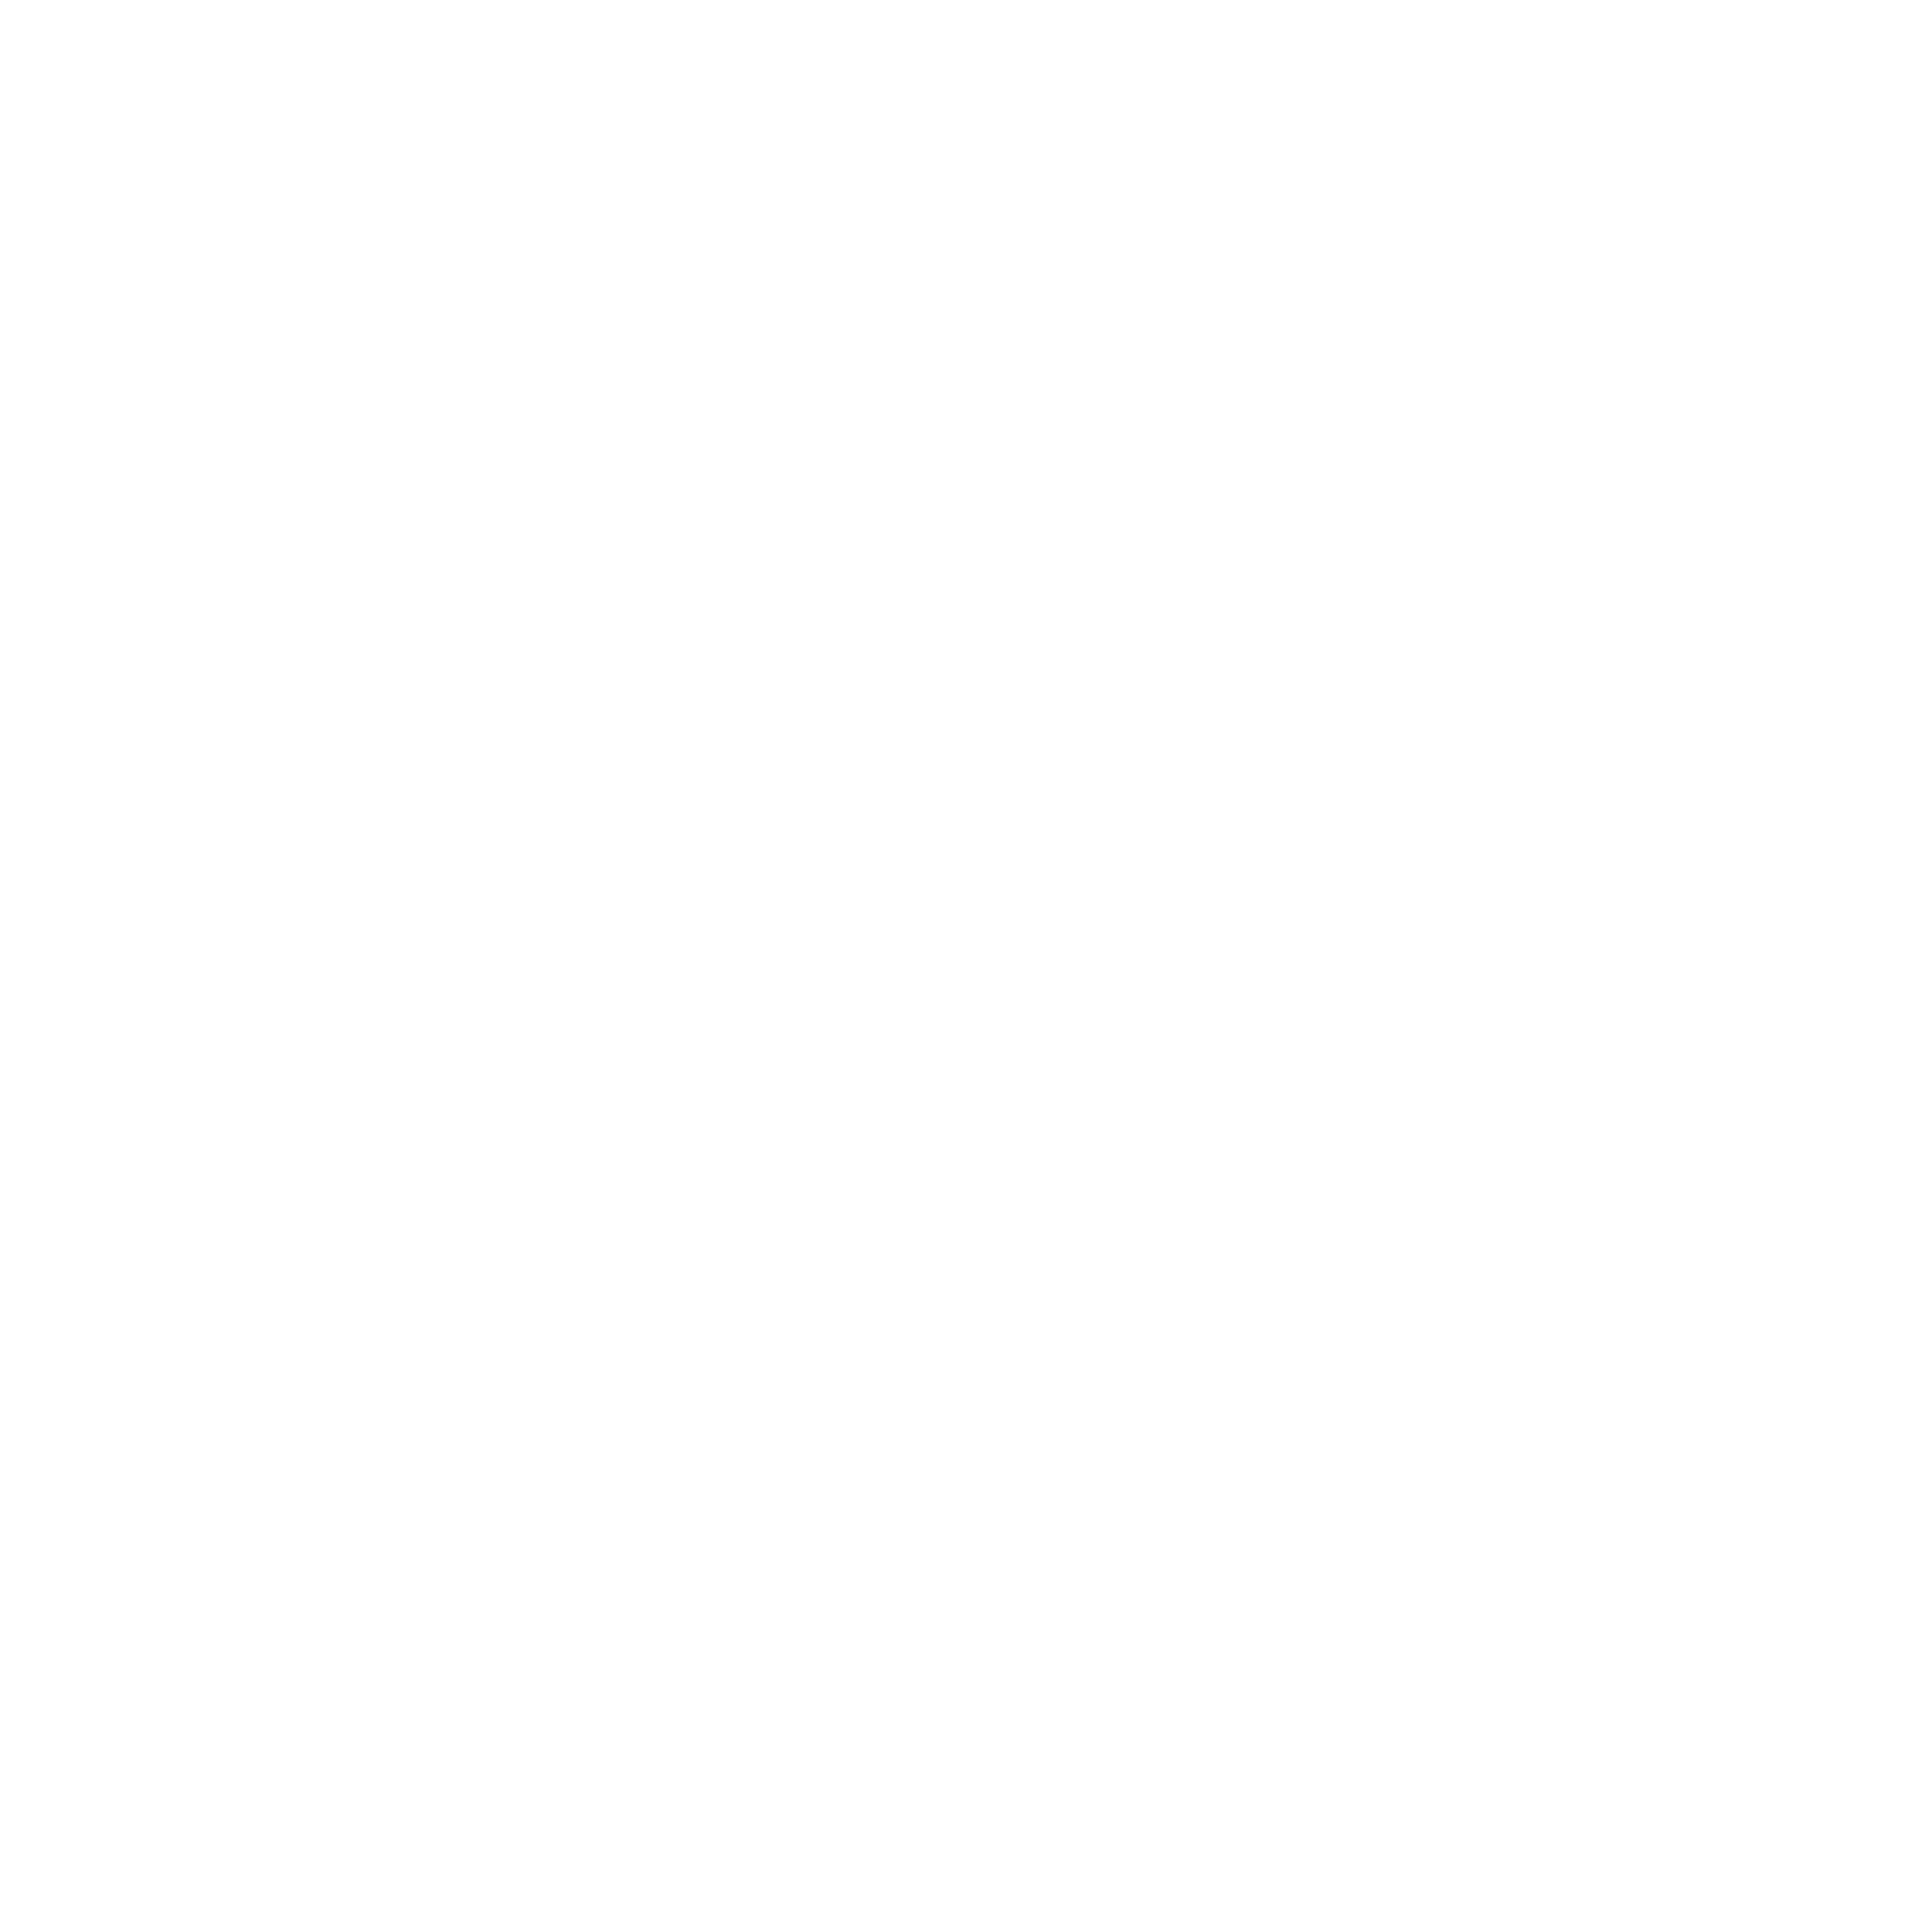 White Visa Logo - VISA Logo PNG Transparent & SVG Vector - Freebie Supply